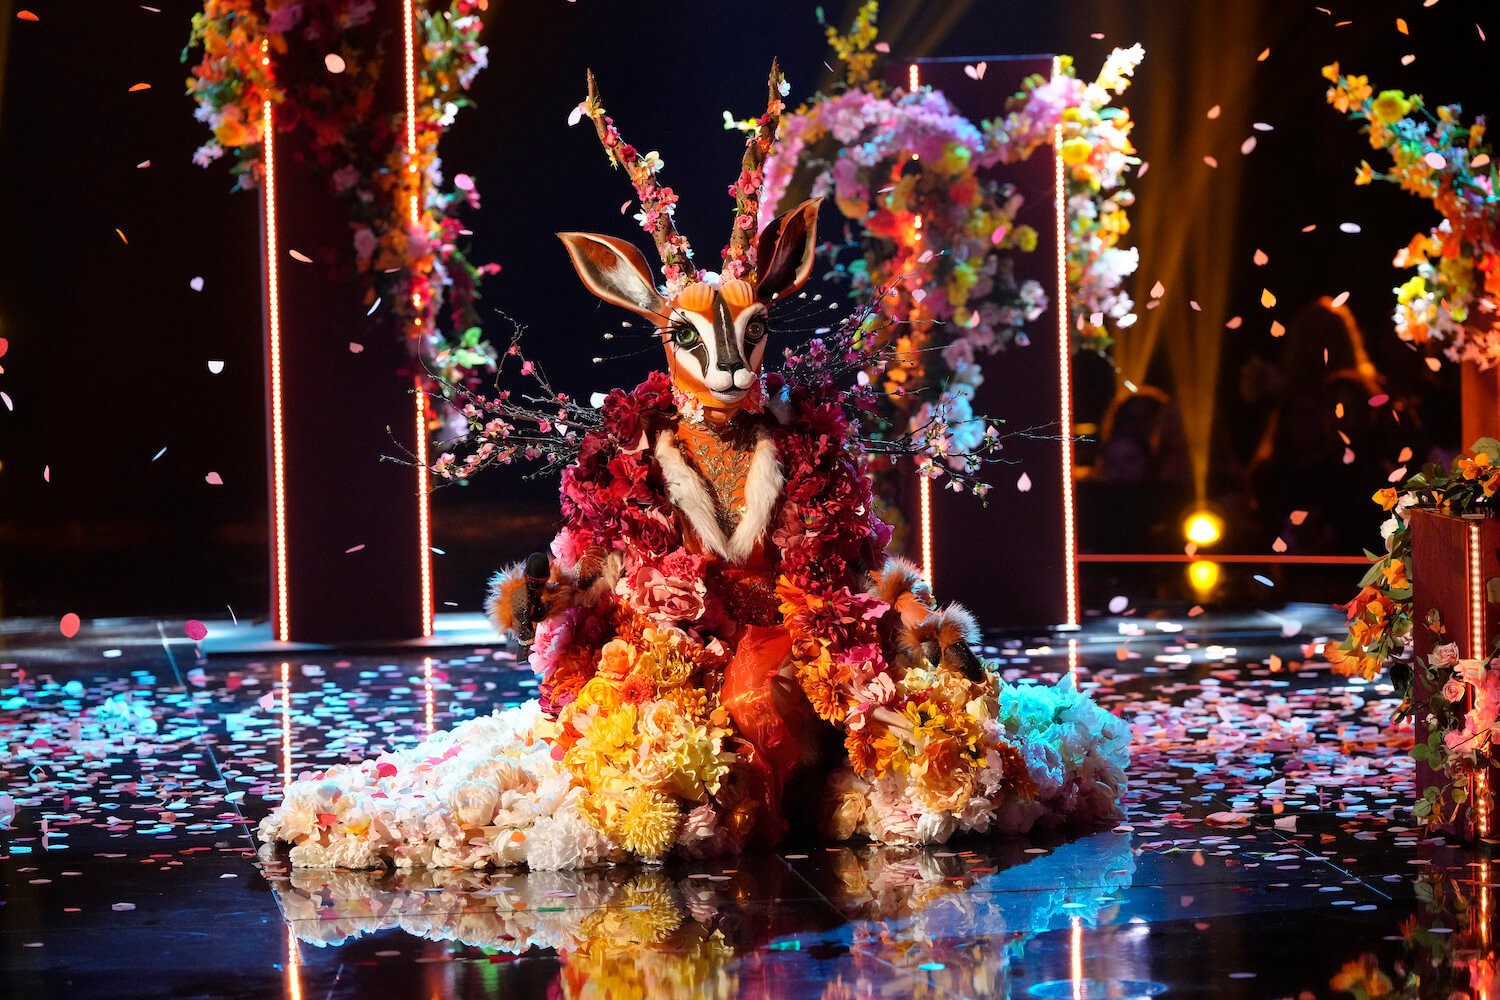 'The Masked Singer' Season 10 finale contestant Gazelle on stage